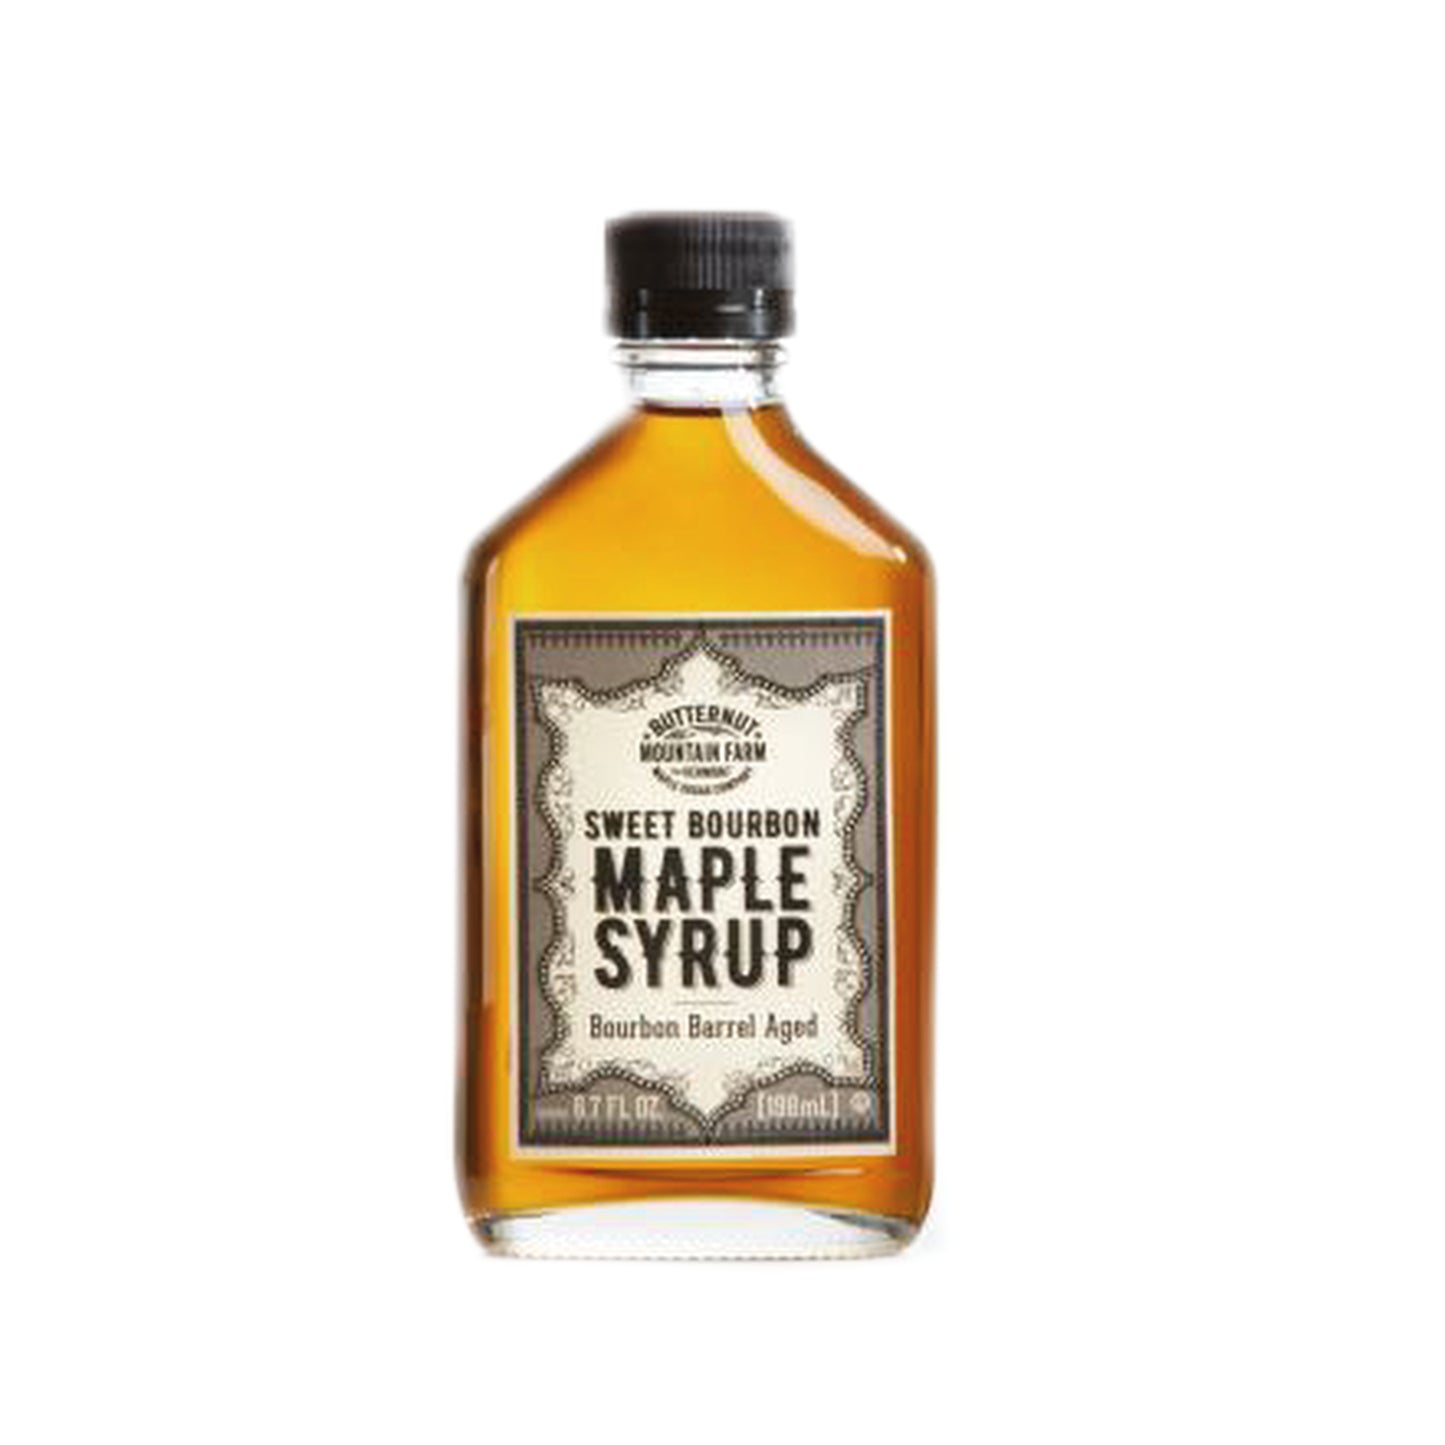 Sweet Bourbon Vermont Maple Syrup (Bourbon Barrel Aged)